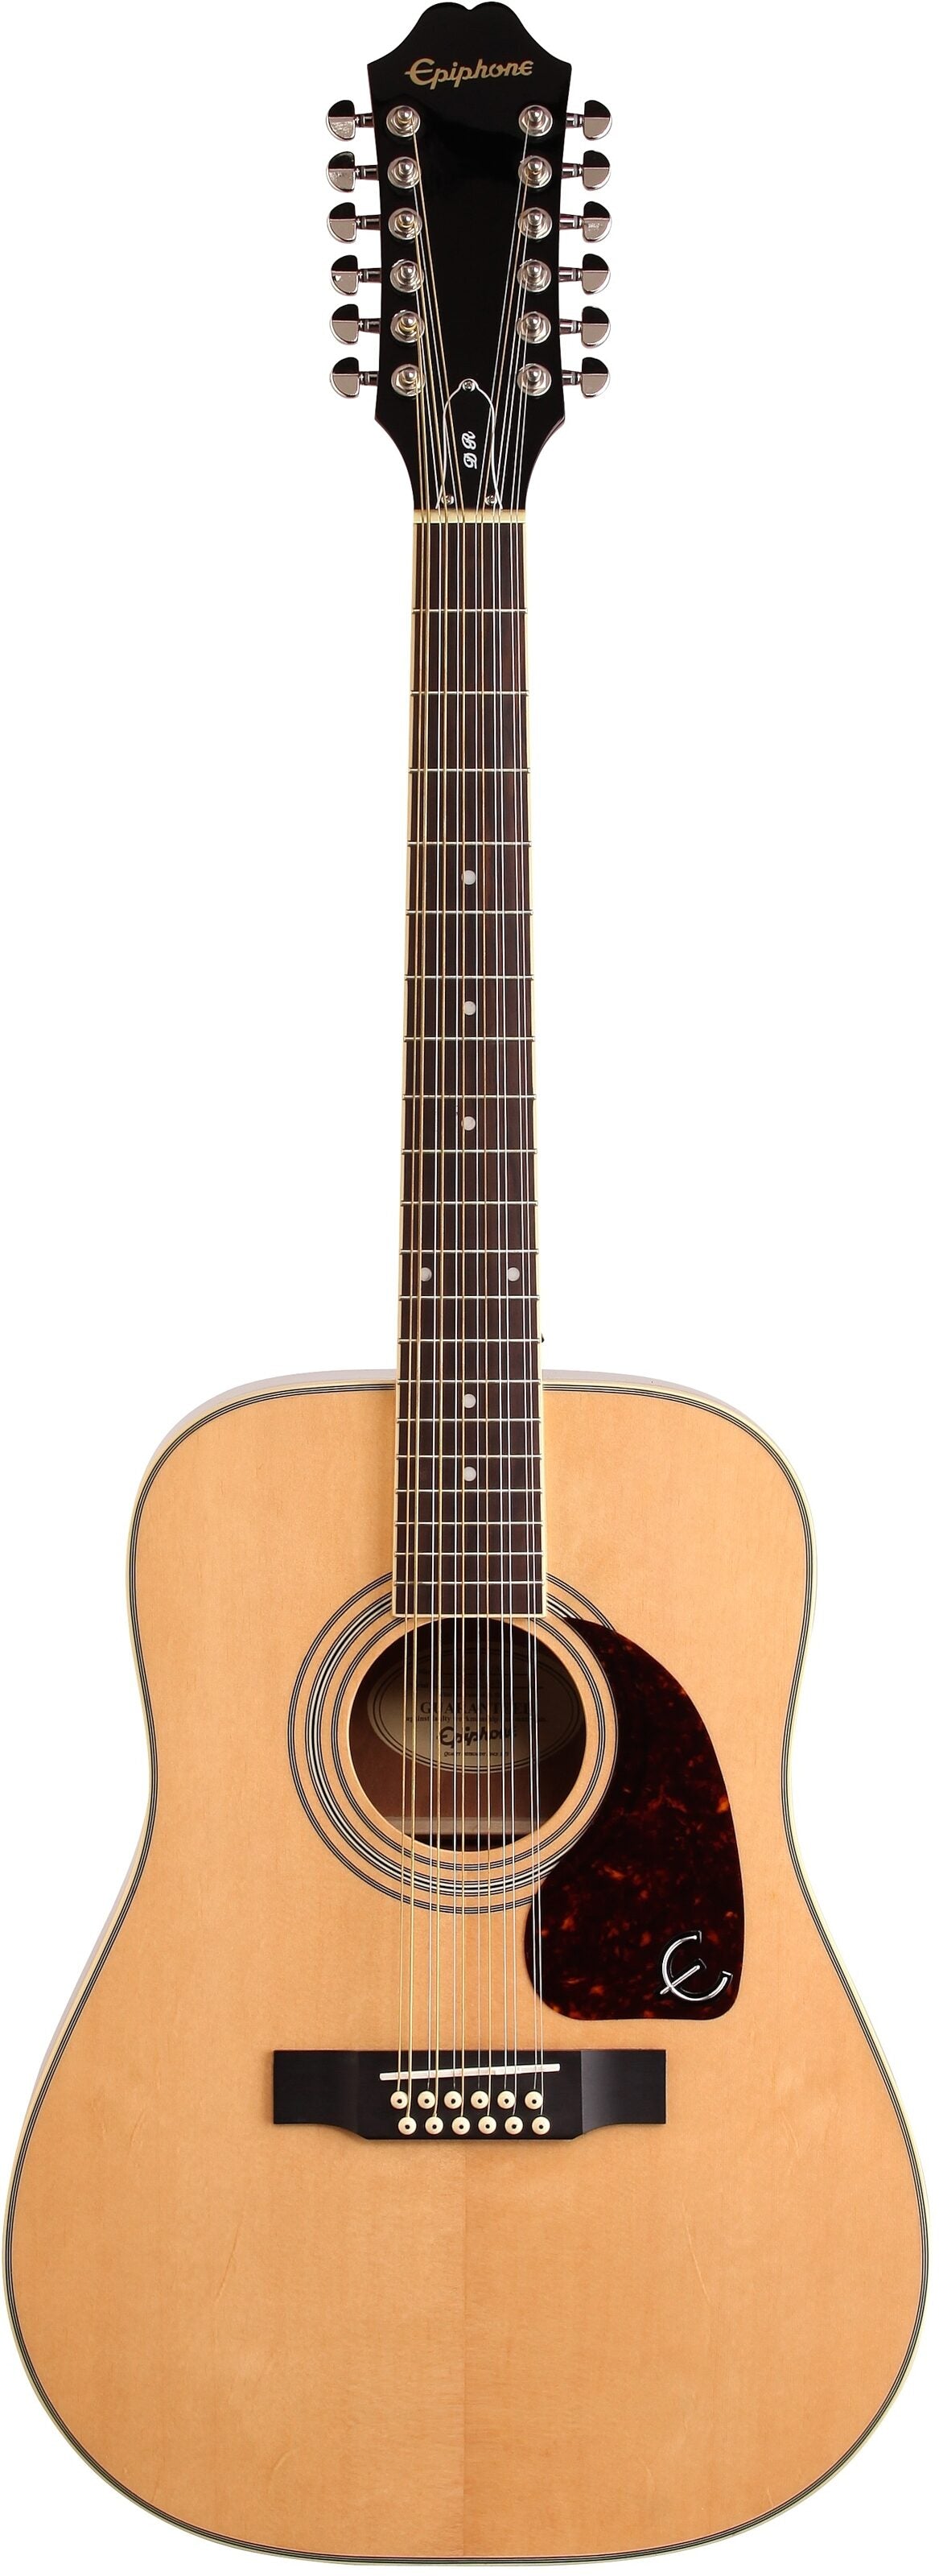 Epiphone Songmaker DR-212 12-string Acoustic Guitar - Natural